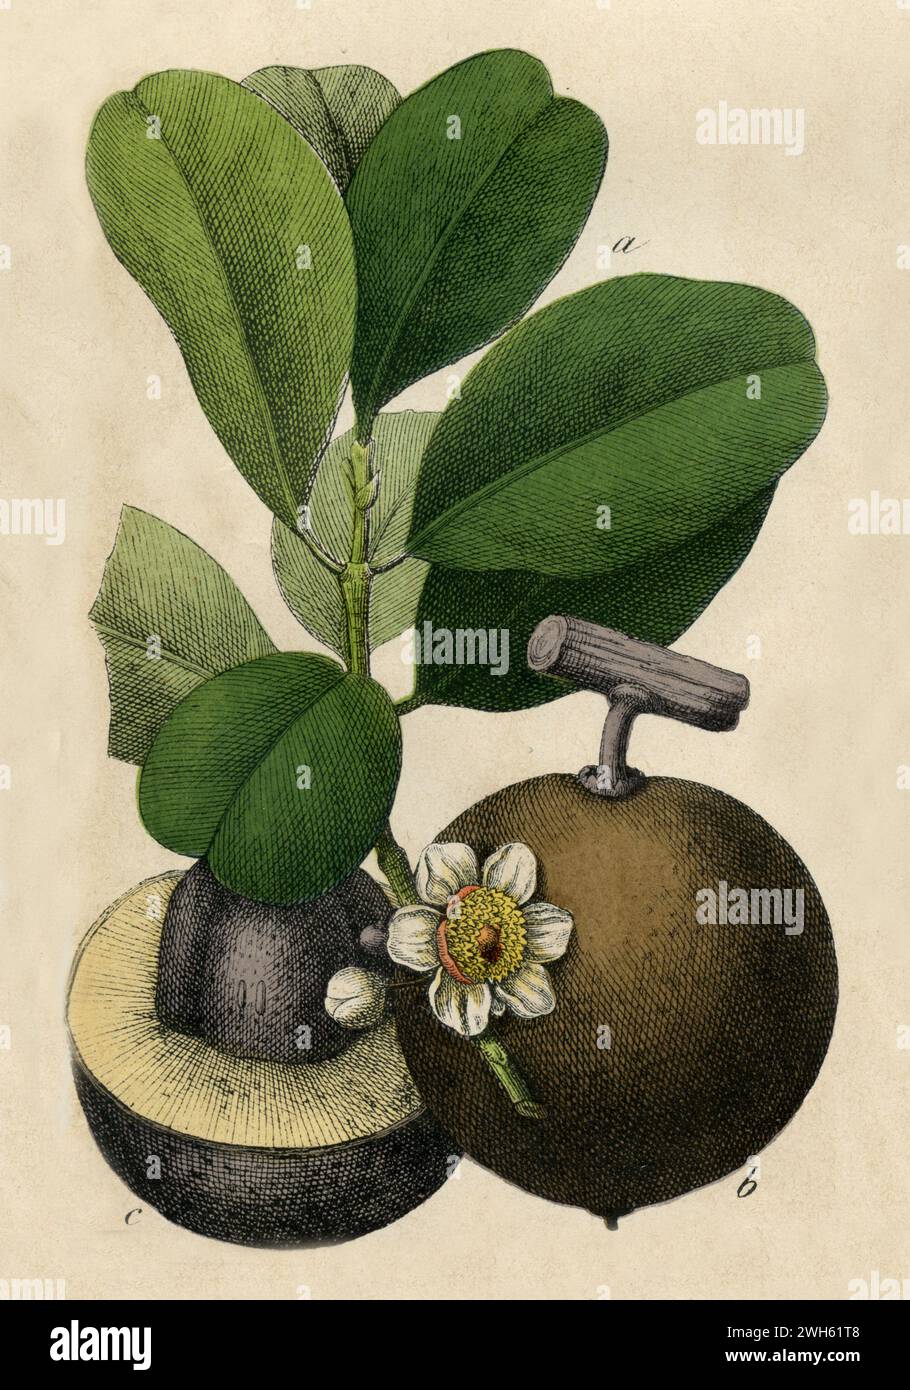 Mammee mela Mammea americana, (libro botanico, 1879), Mammiapfel Foto Stock